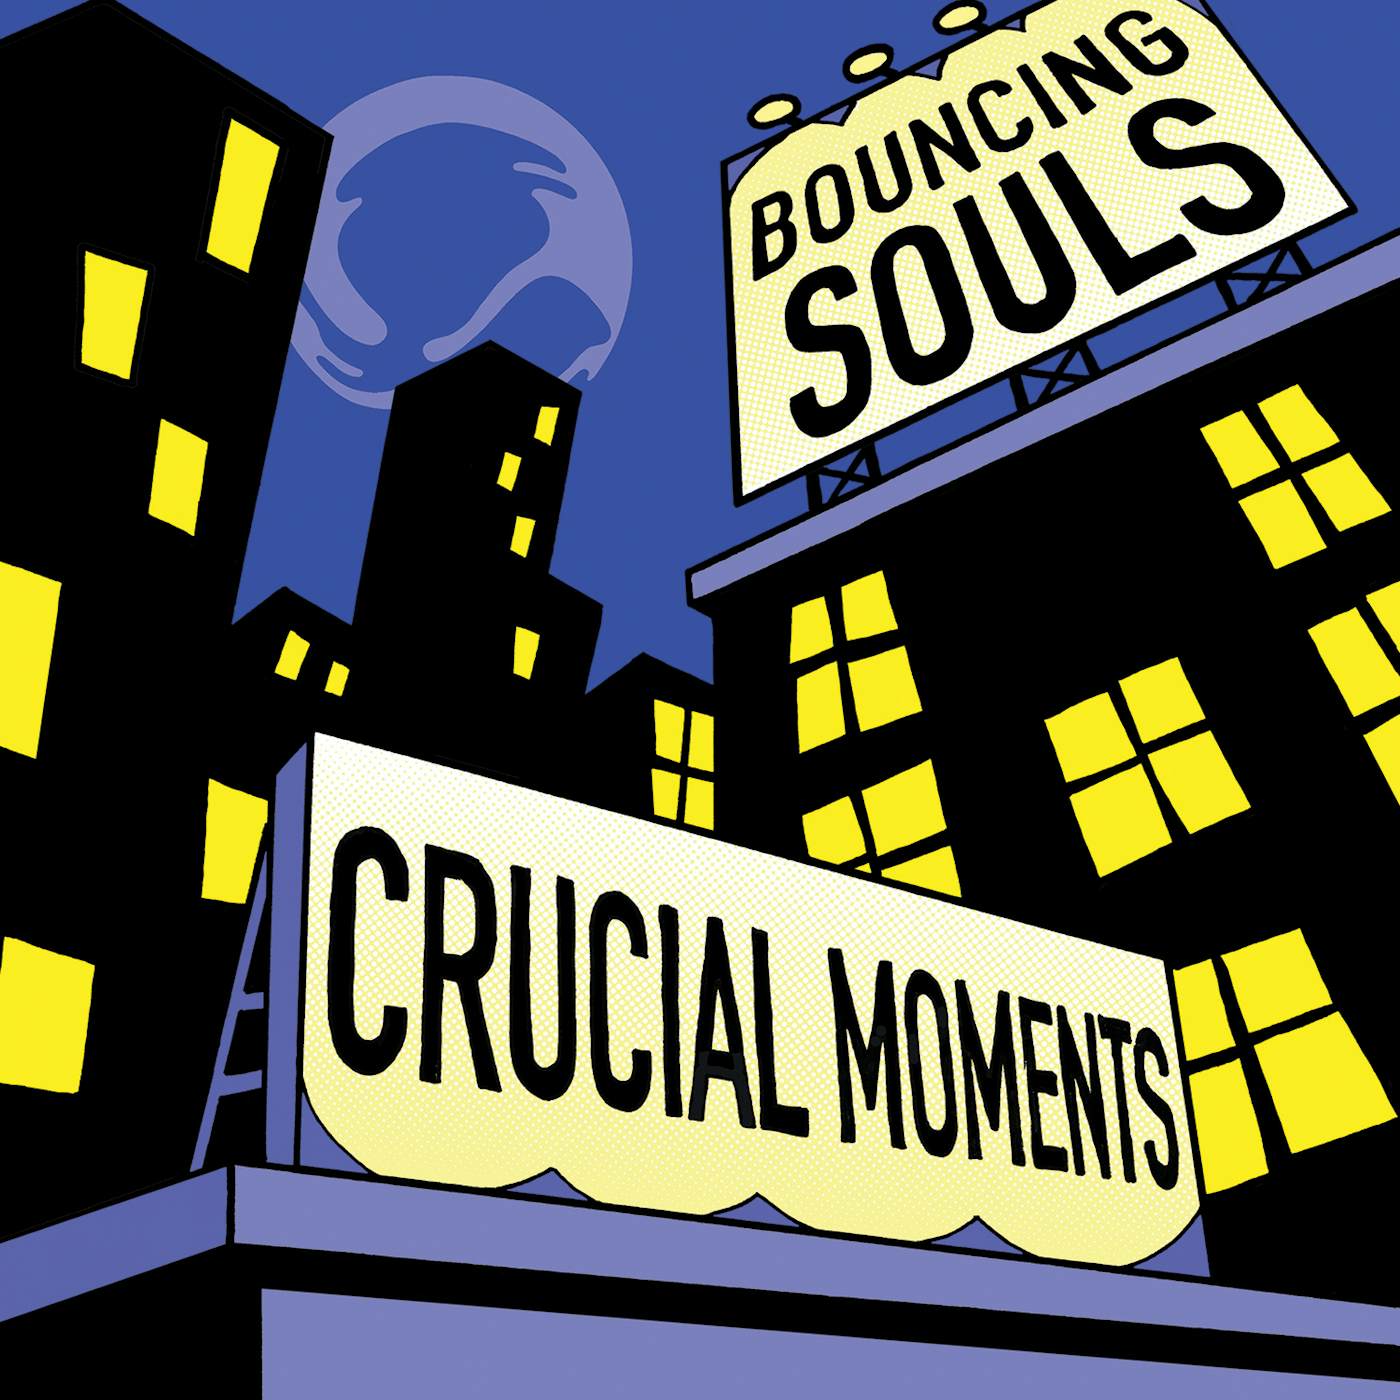 The Bouncing Souls Crucial Moments Vinyl Record